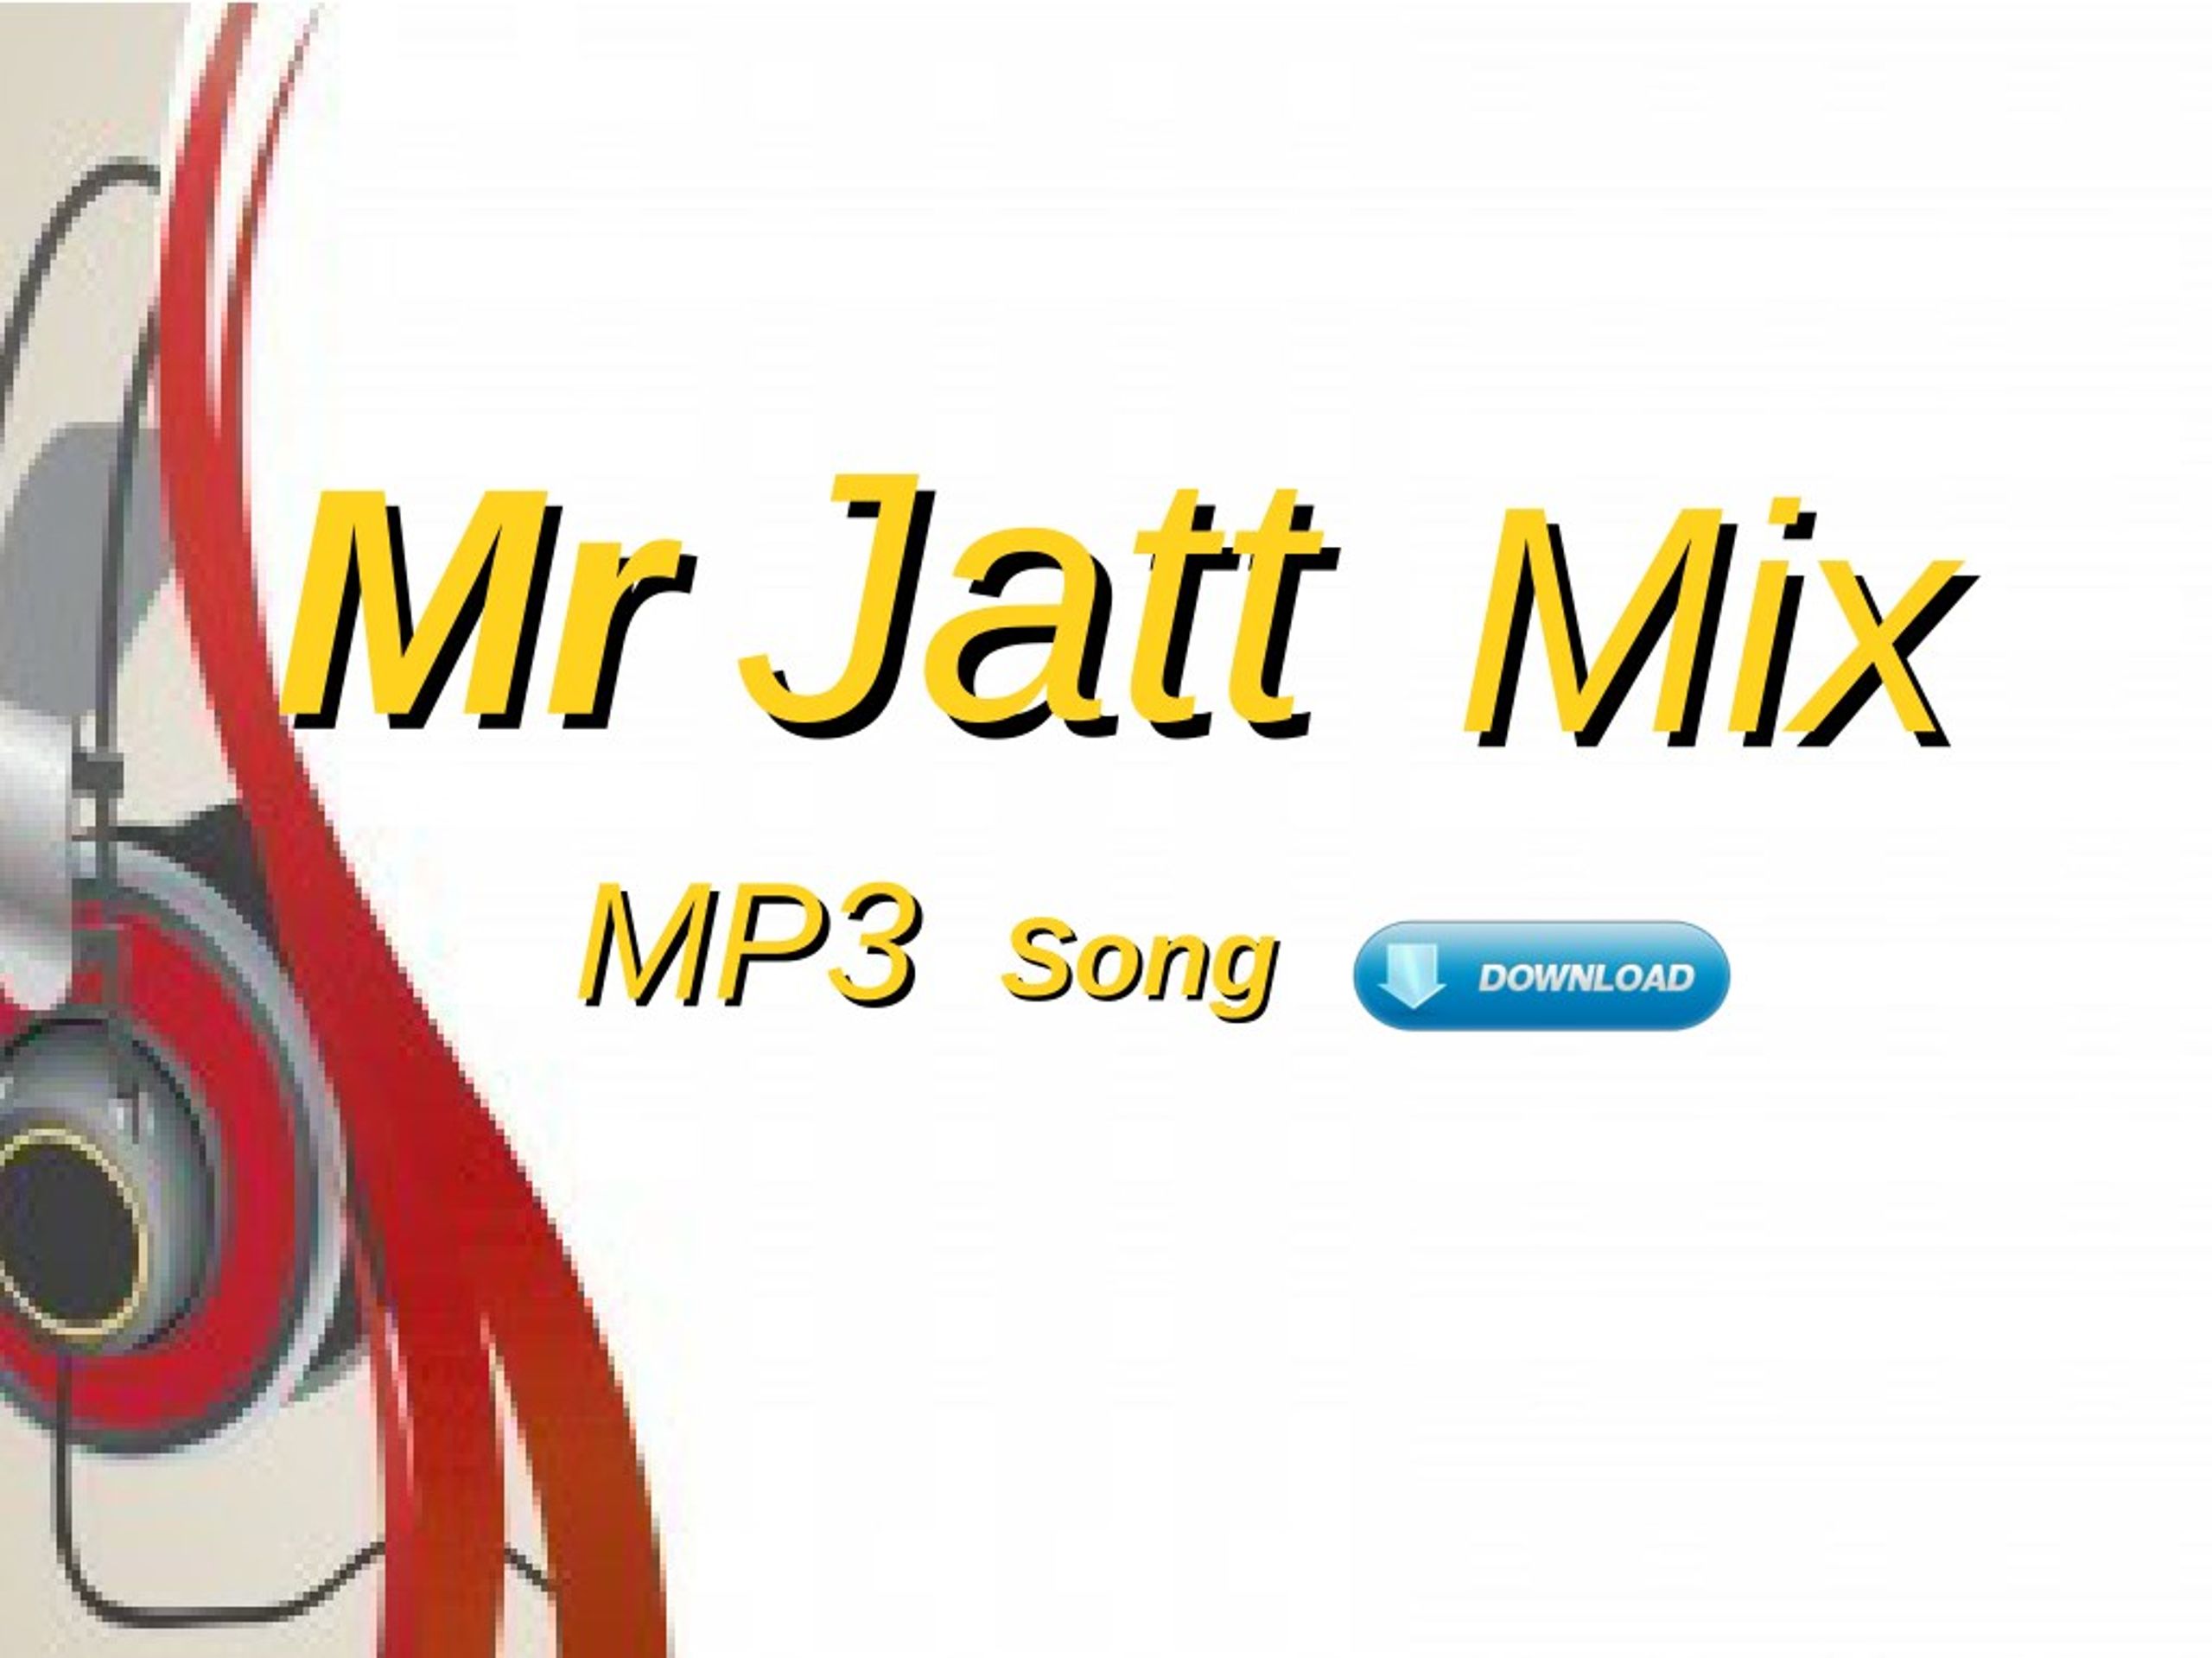 Game Song Download Sidhu Moose Wala Mr Jatt in High Quality